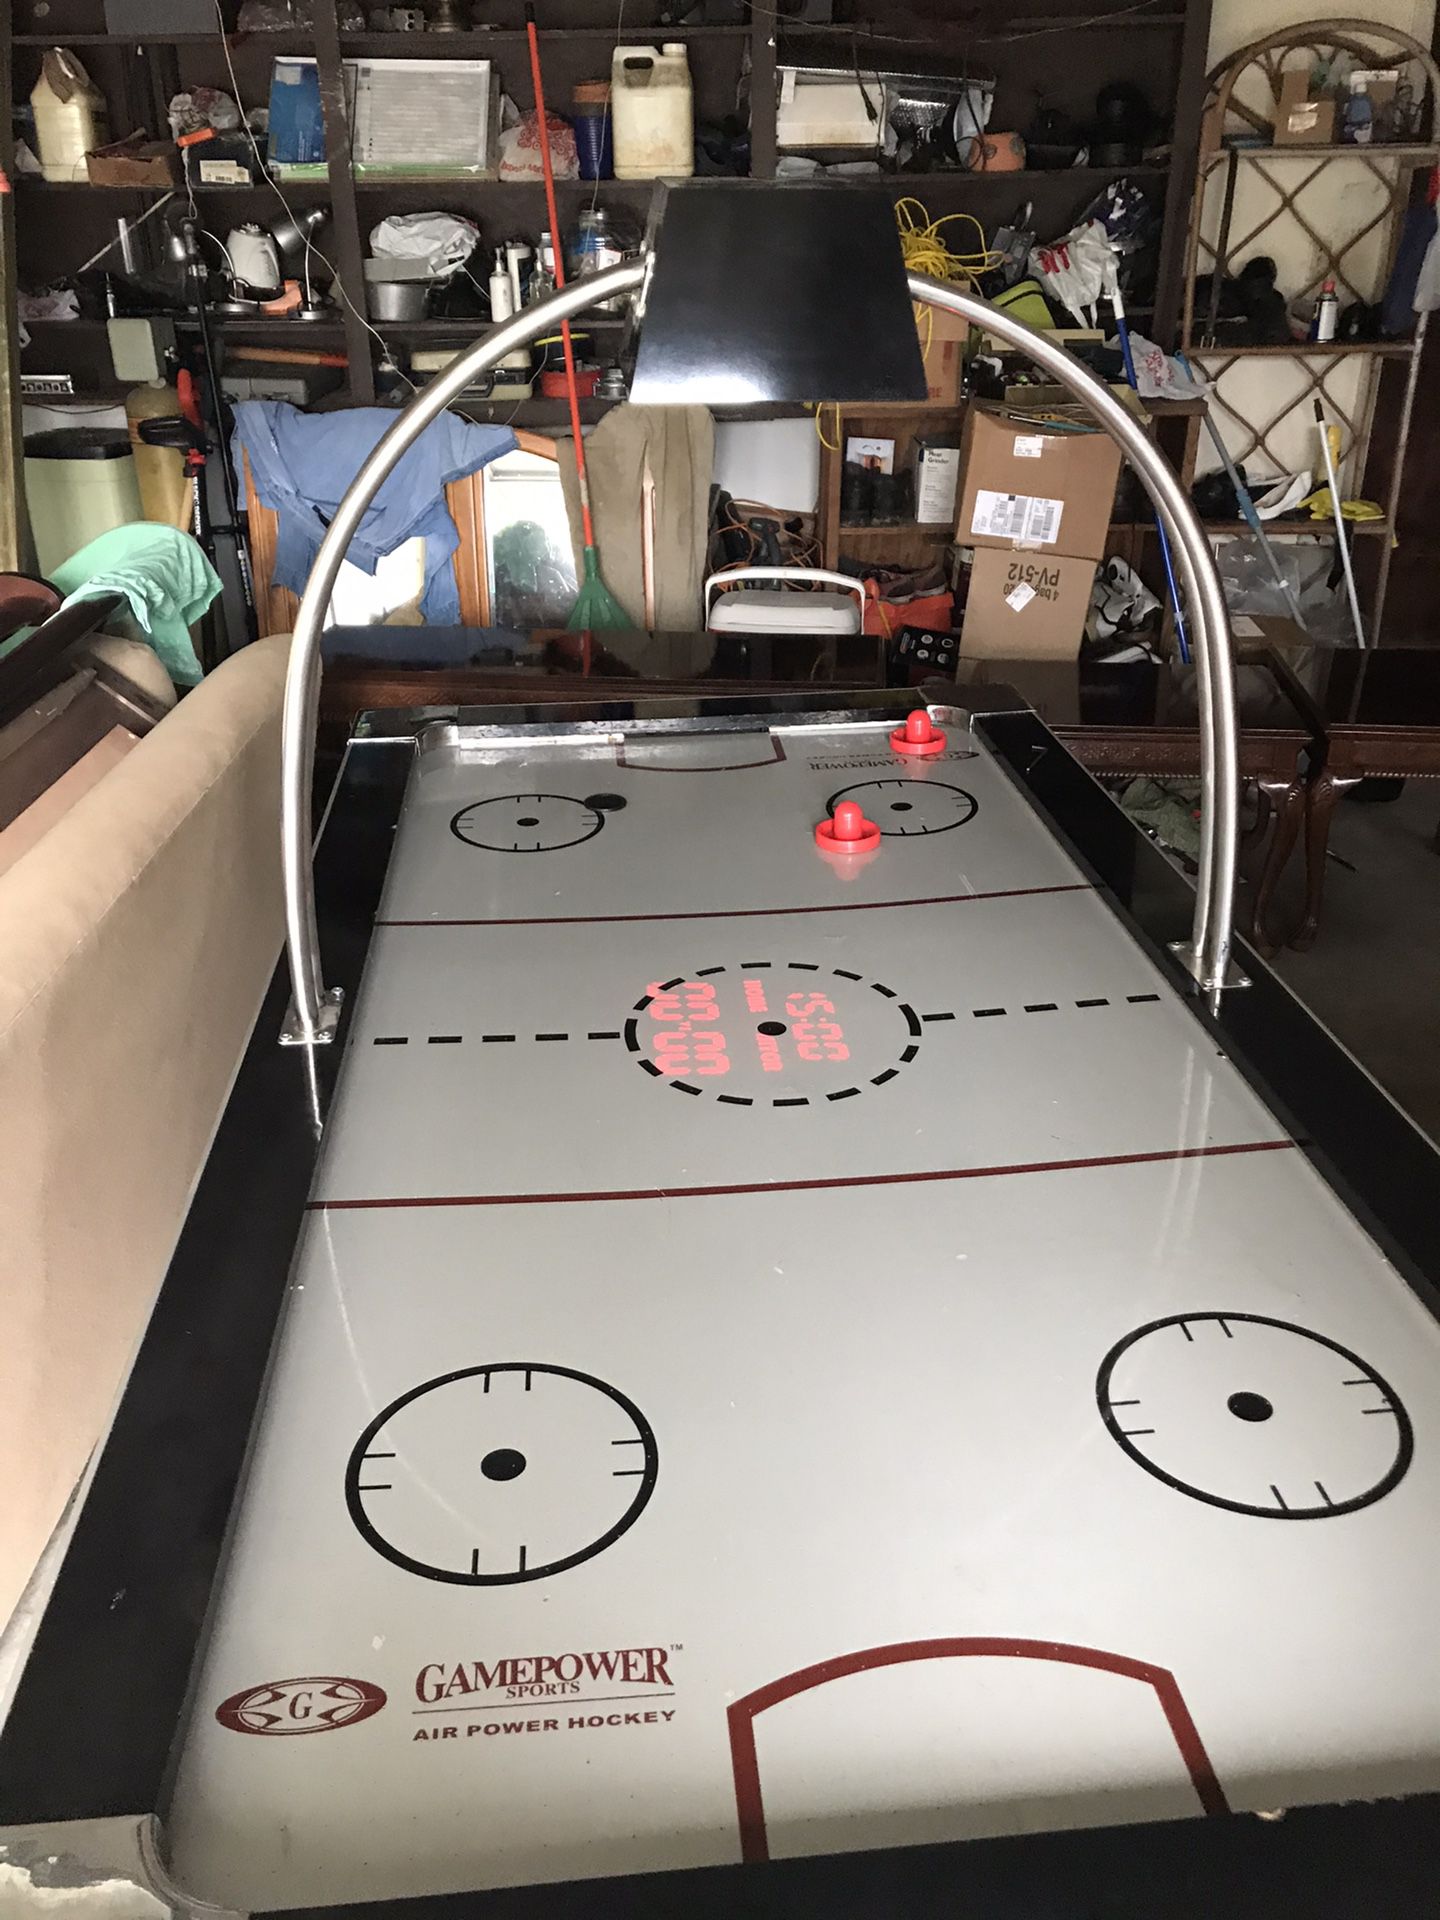 Game power air hockey table